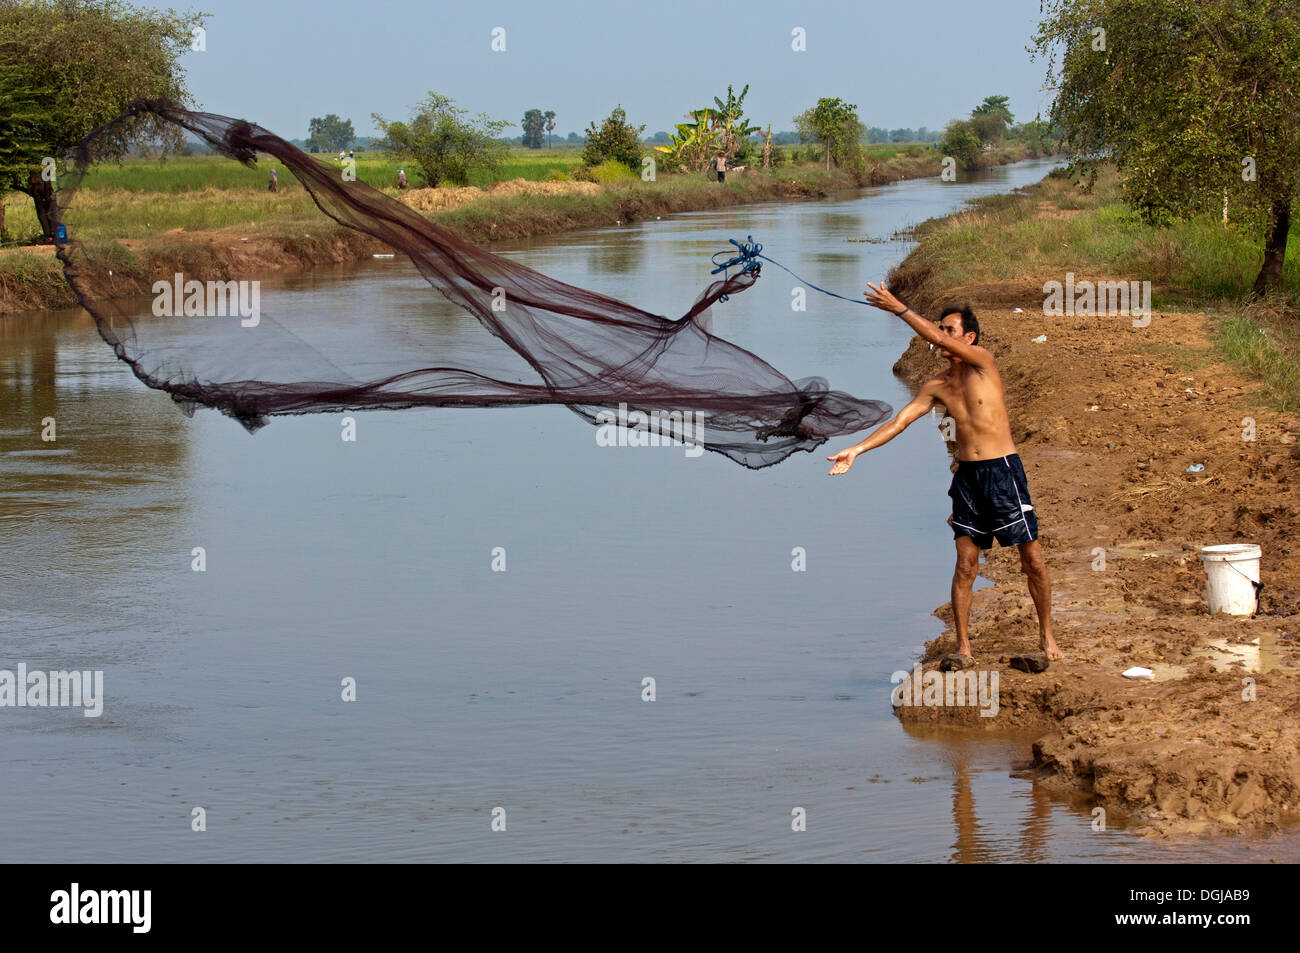 Fisherman fishing by casting a throw net in a river, Battambang